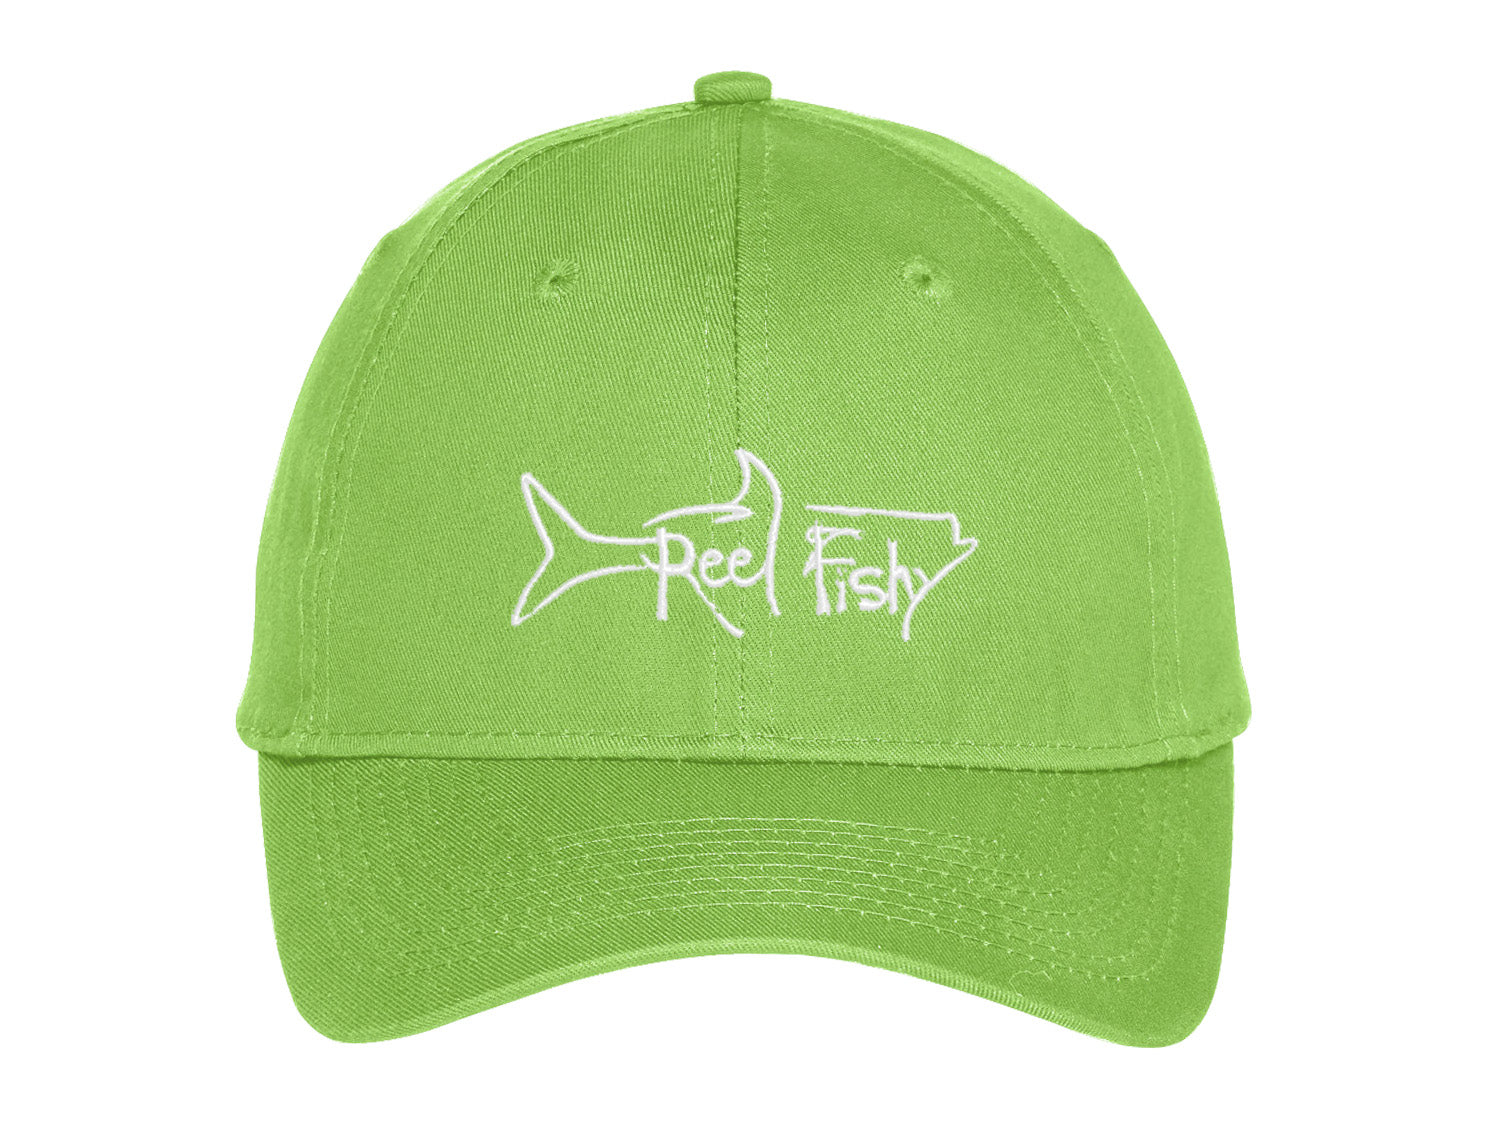 Youth Fishing Hats with Reel Fishy Tarpon Logo - Lime Green